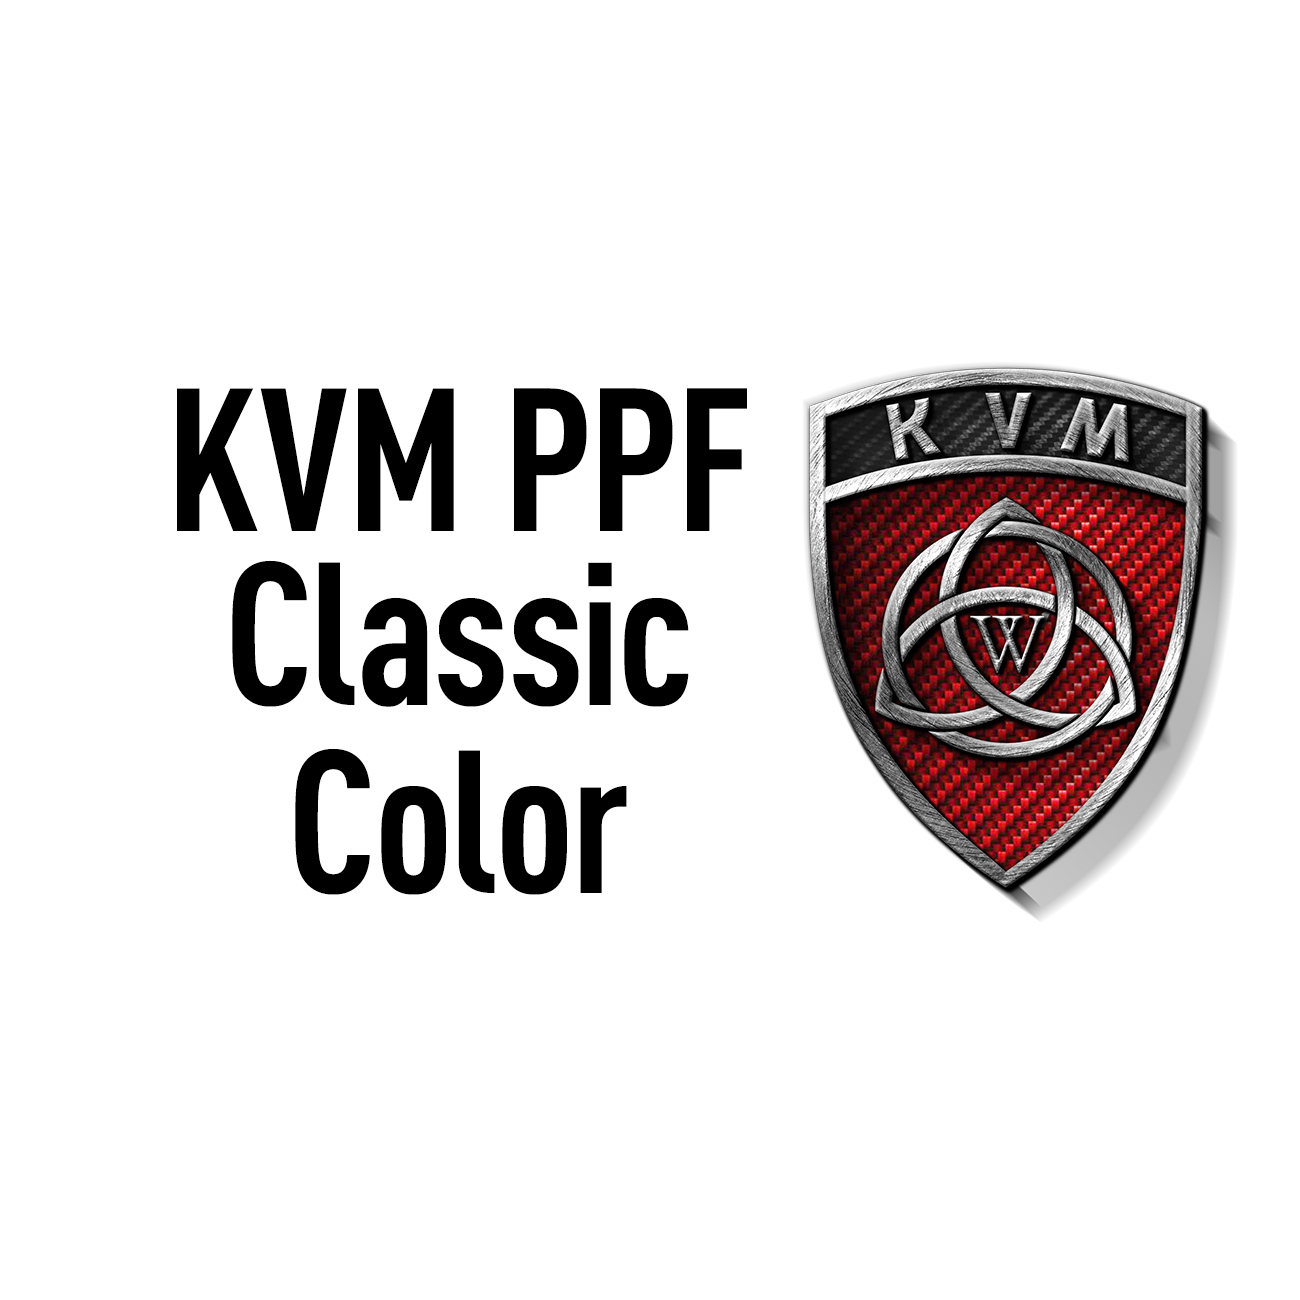 Пленка KVM Classic PPF Purple (Фиолетовый) 0,61 для фар